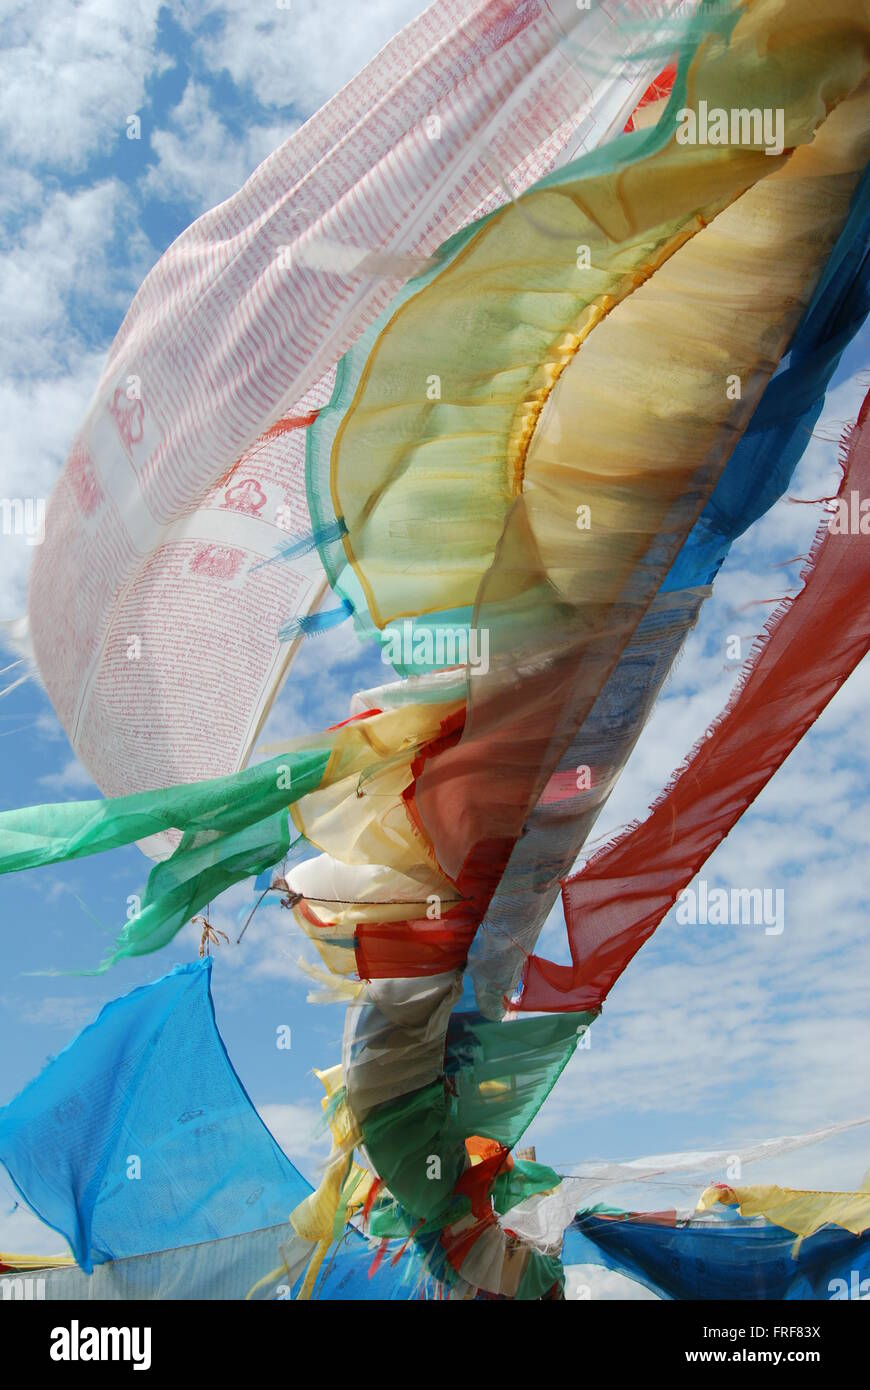 Tibet - 08/08/2009 - Tibet - preghiera tibetano bandiere nel vento, Xining - Sandrine Huet / Le Pictorium Foto Stock